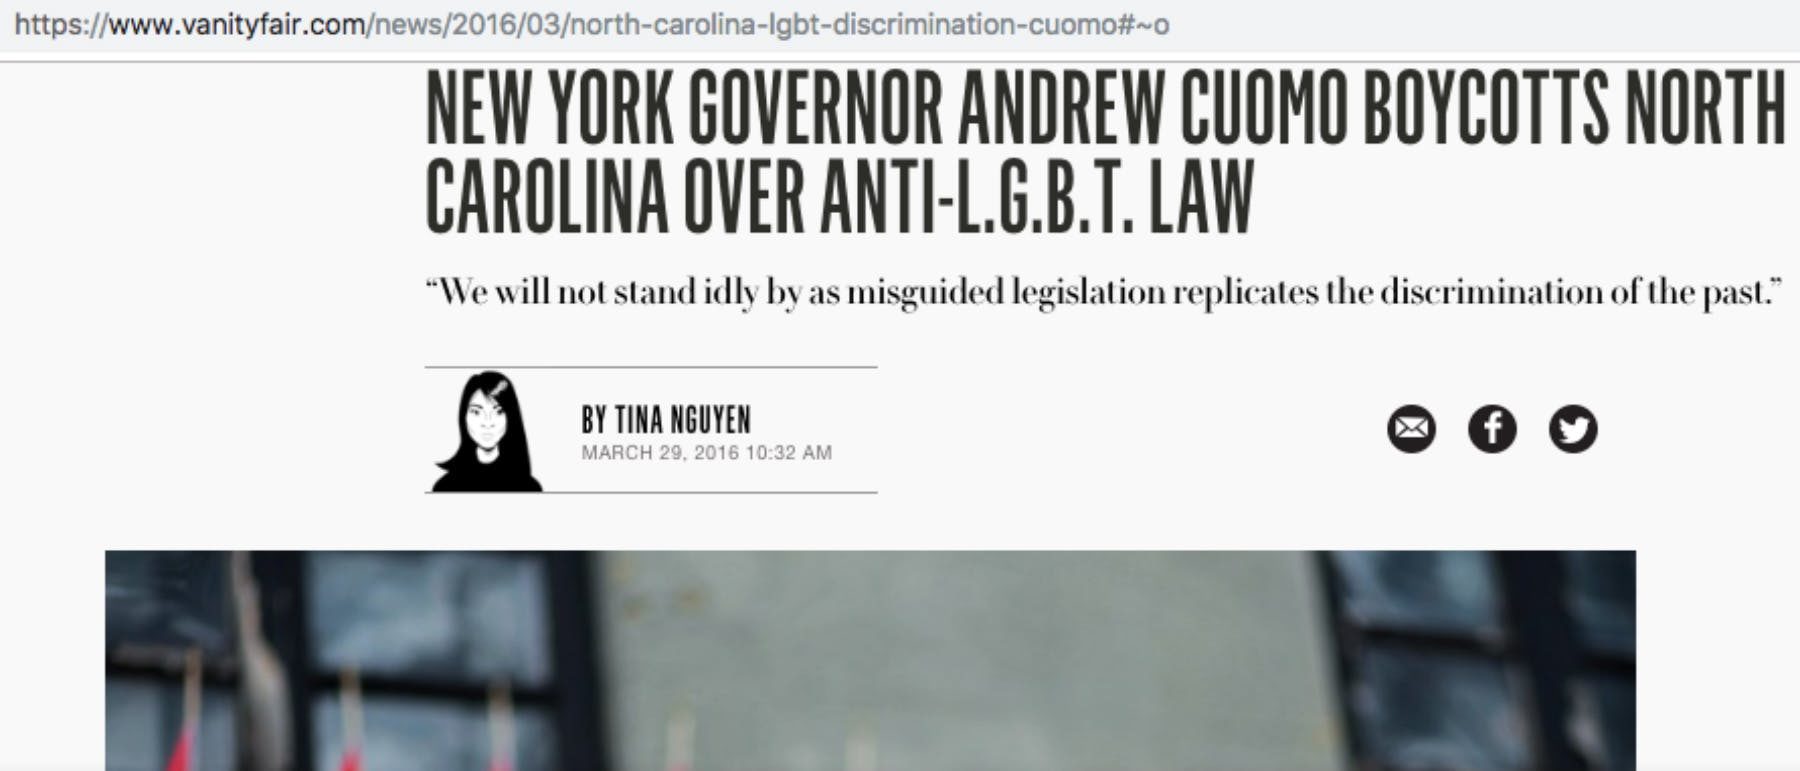 NY Governor boycott NC anti-lgbt law